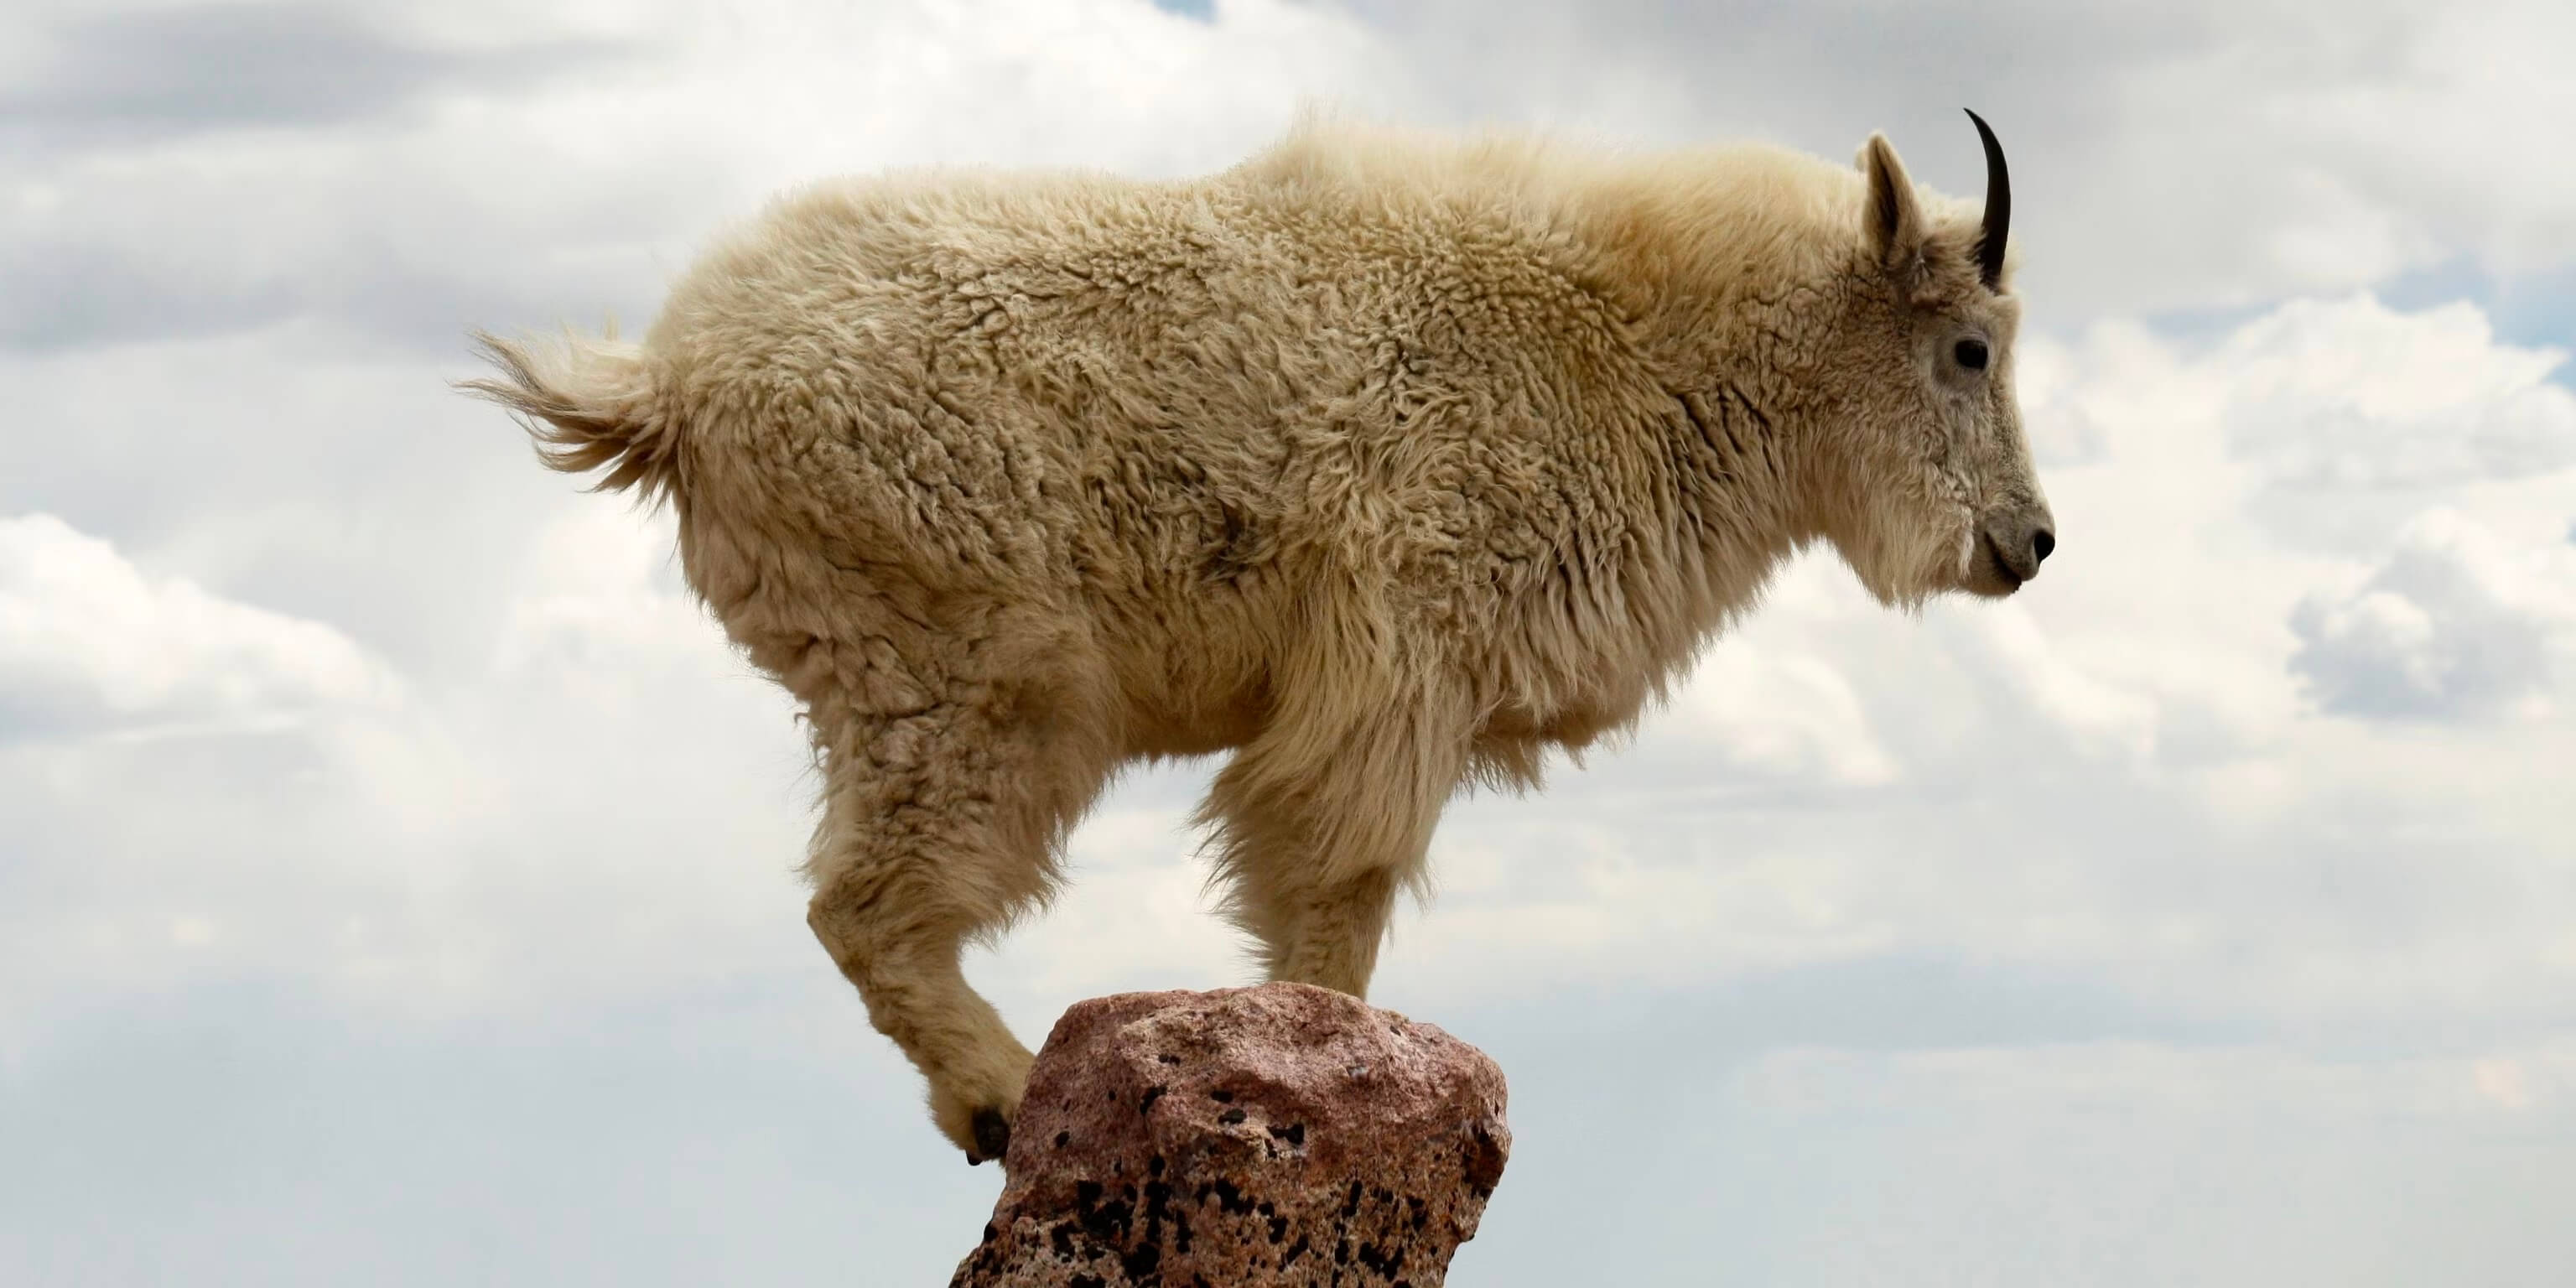 Mountain goat, origin: https://www.nationalgeographic.com/animals/mammals/facts/mountain-goat